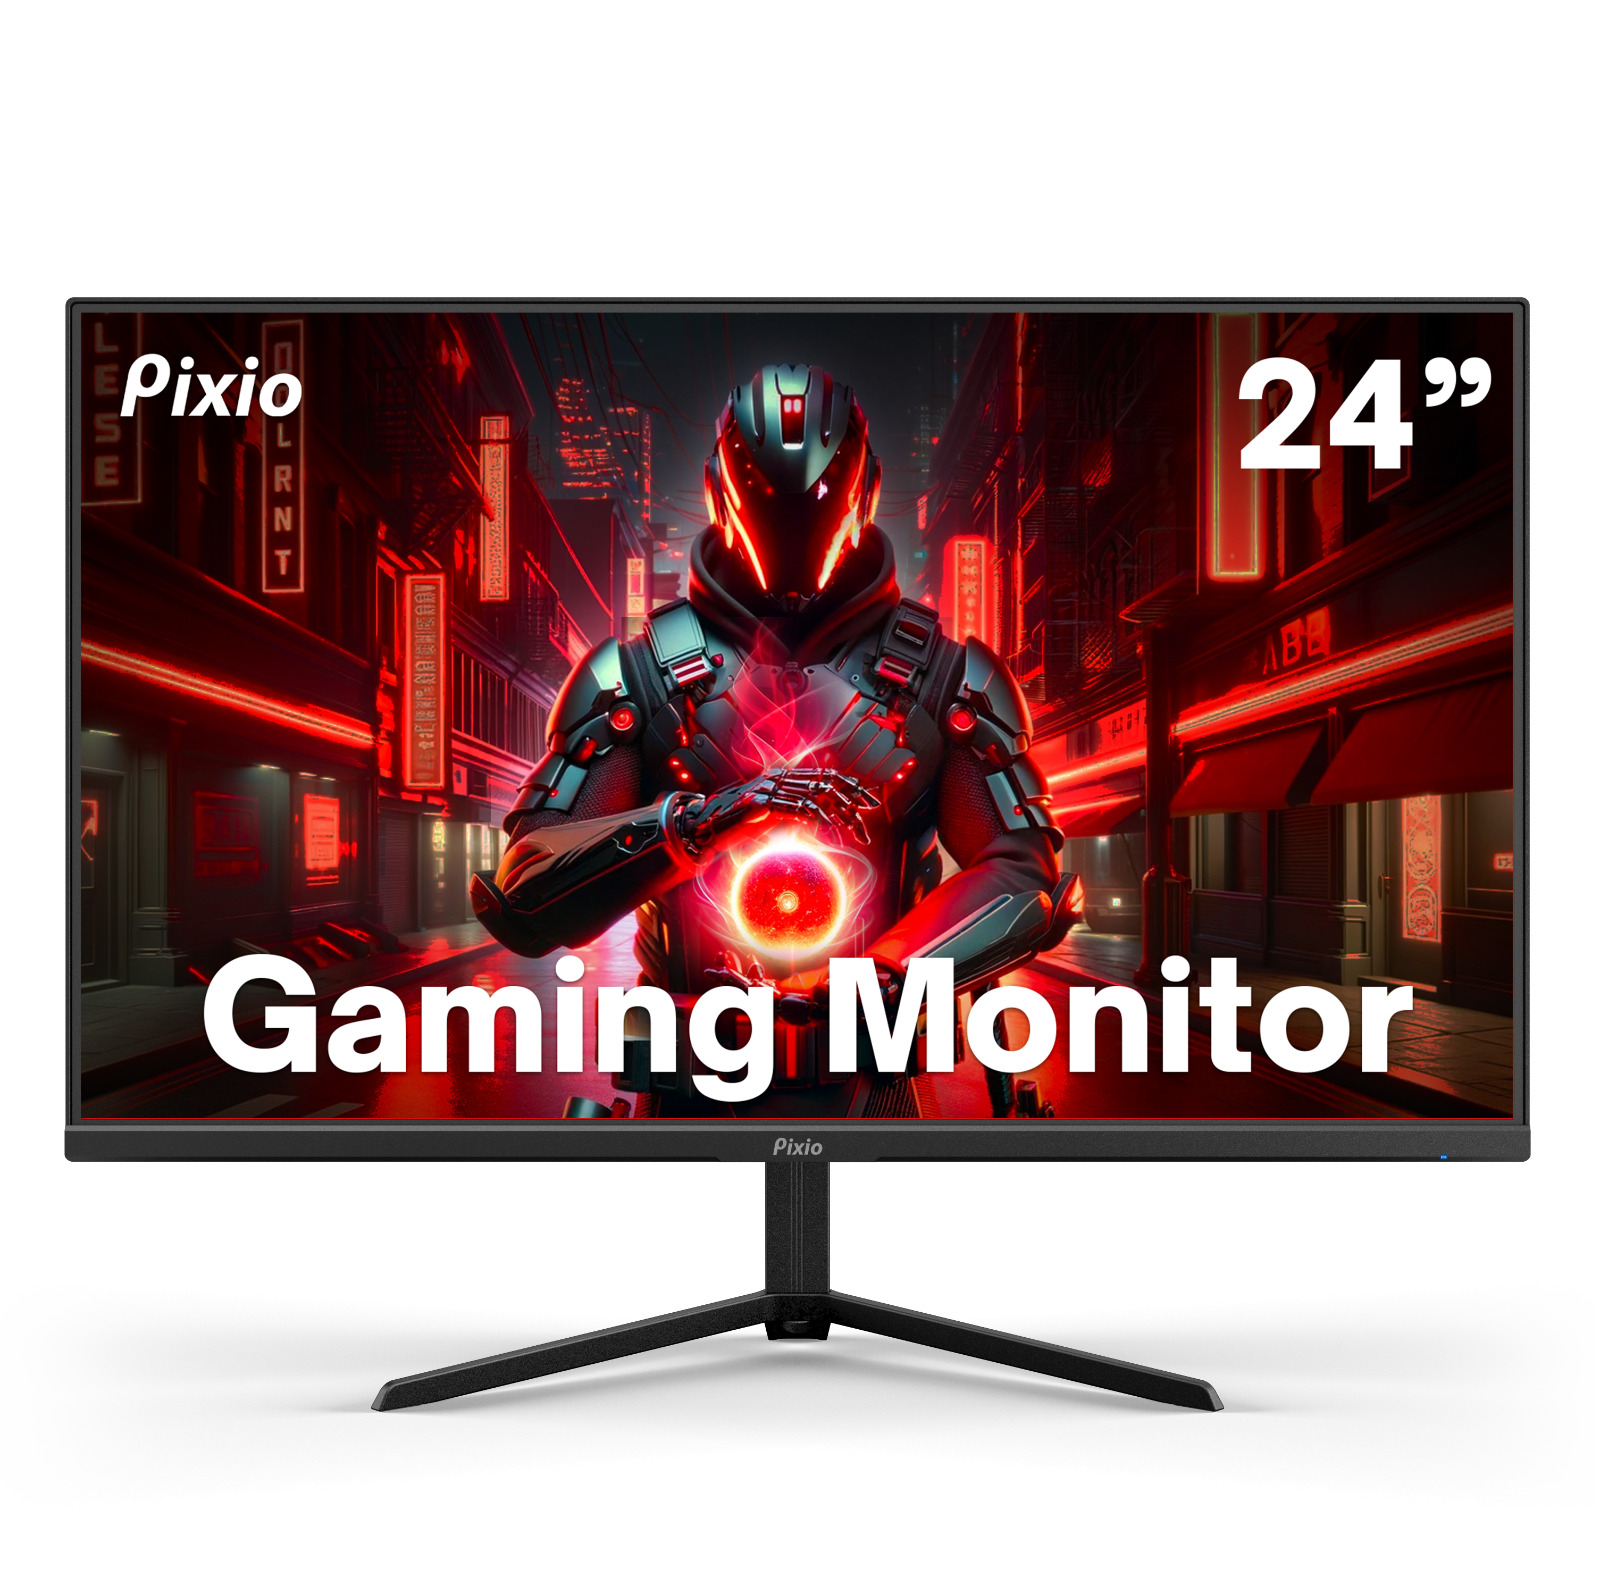 Pixio PX248 Prime Advanced 24in 144Hz 1ms GTG IPS 1080p FreeSync Gaming Monitor